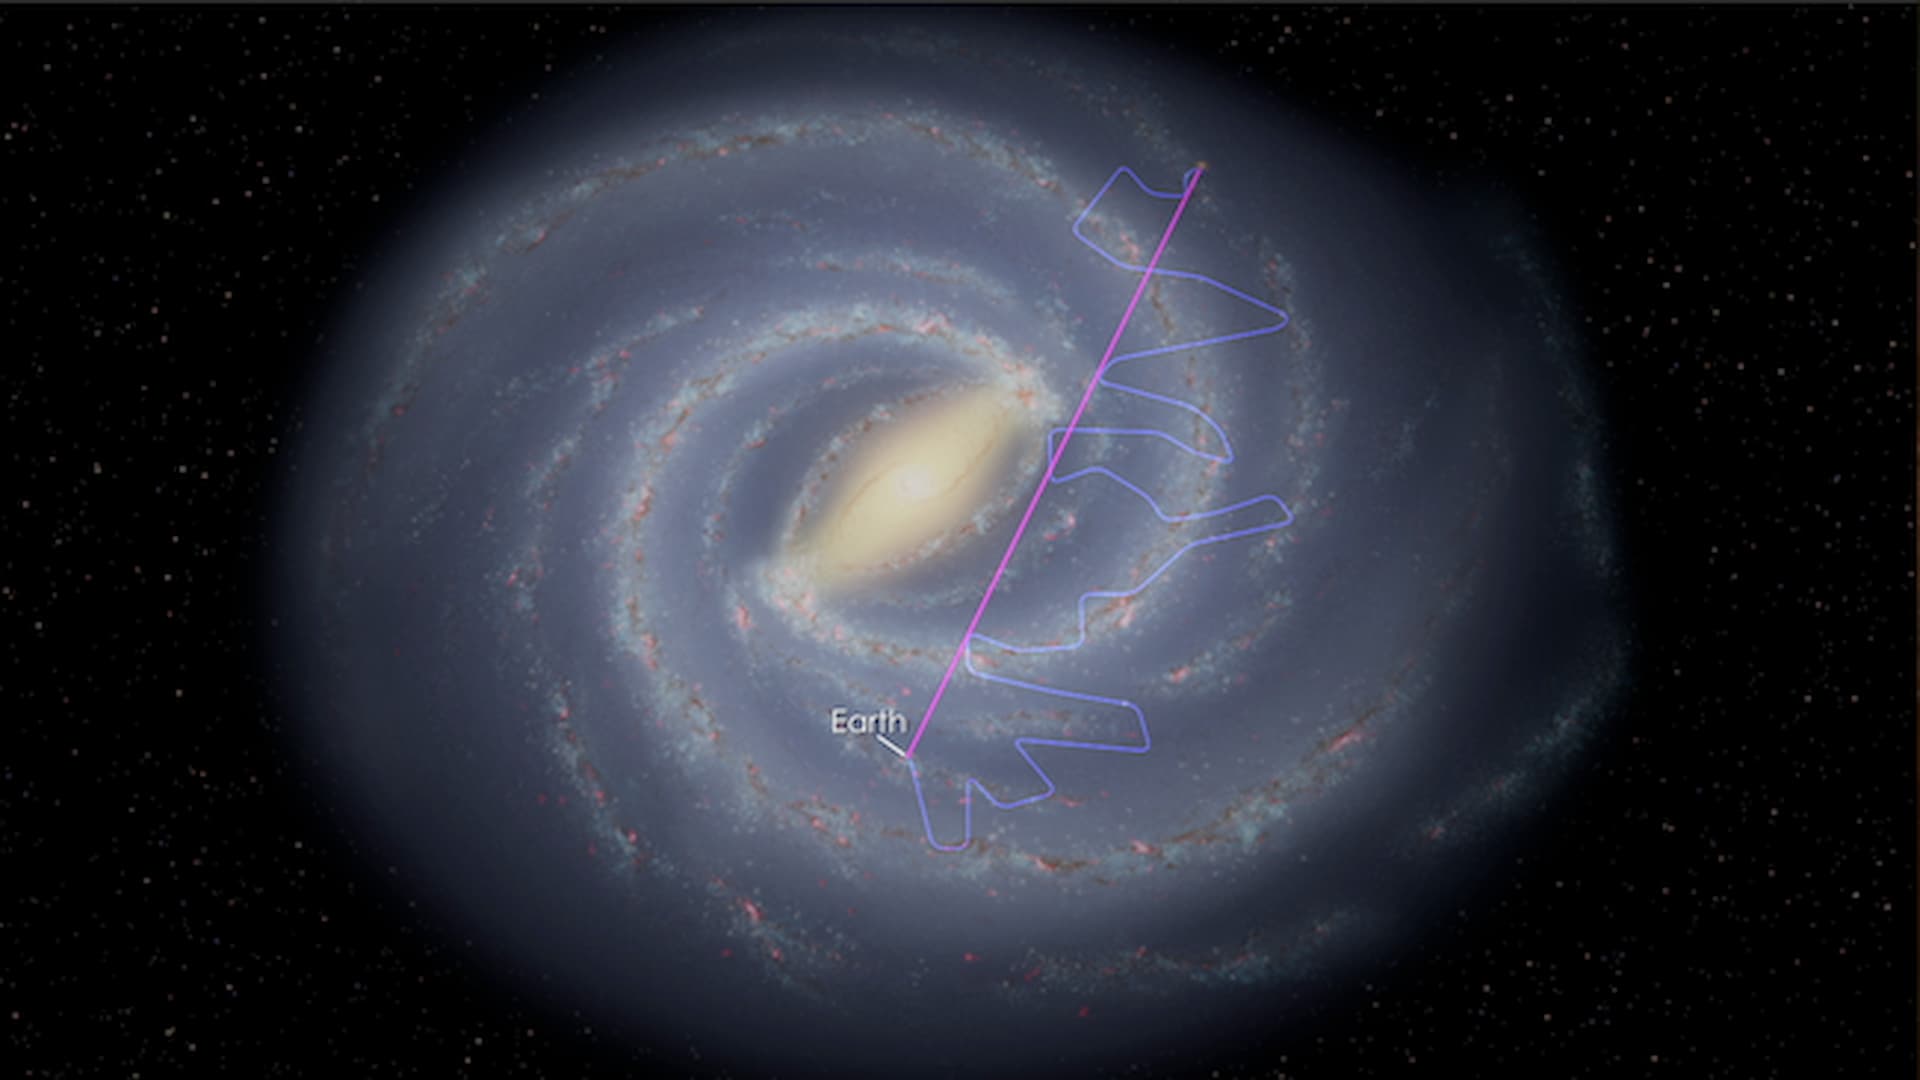 MoRe-ASI: Cosmic rays in the interstellar medium